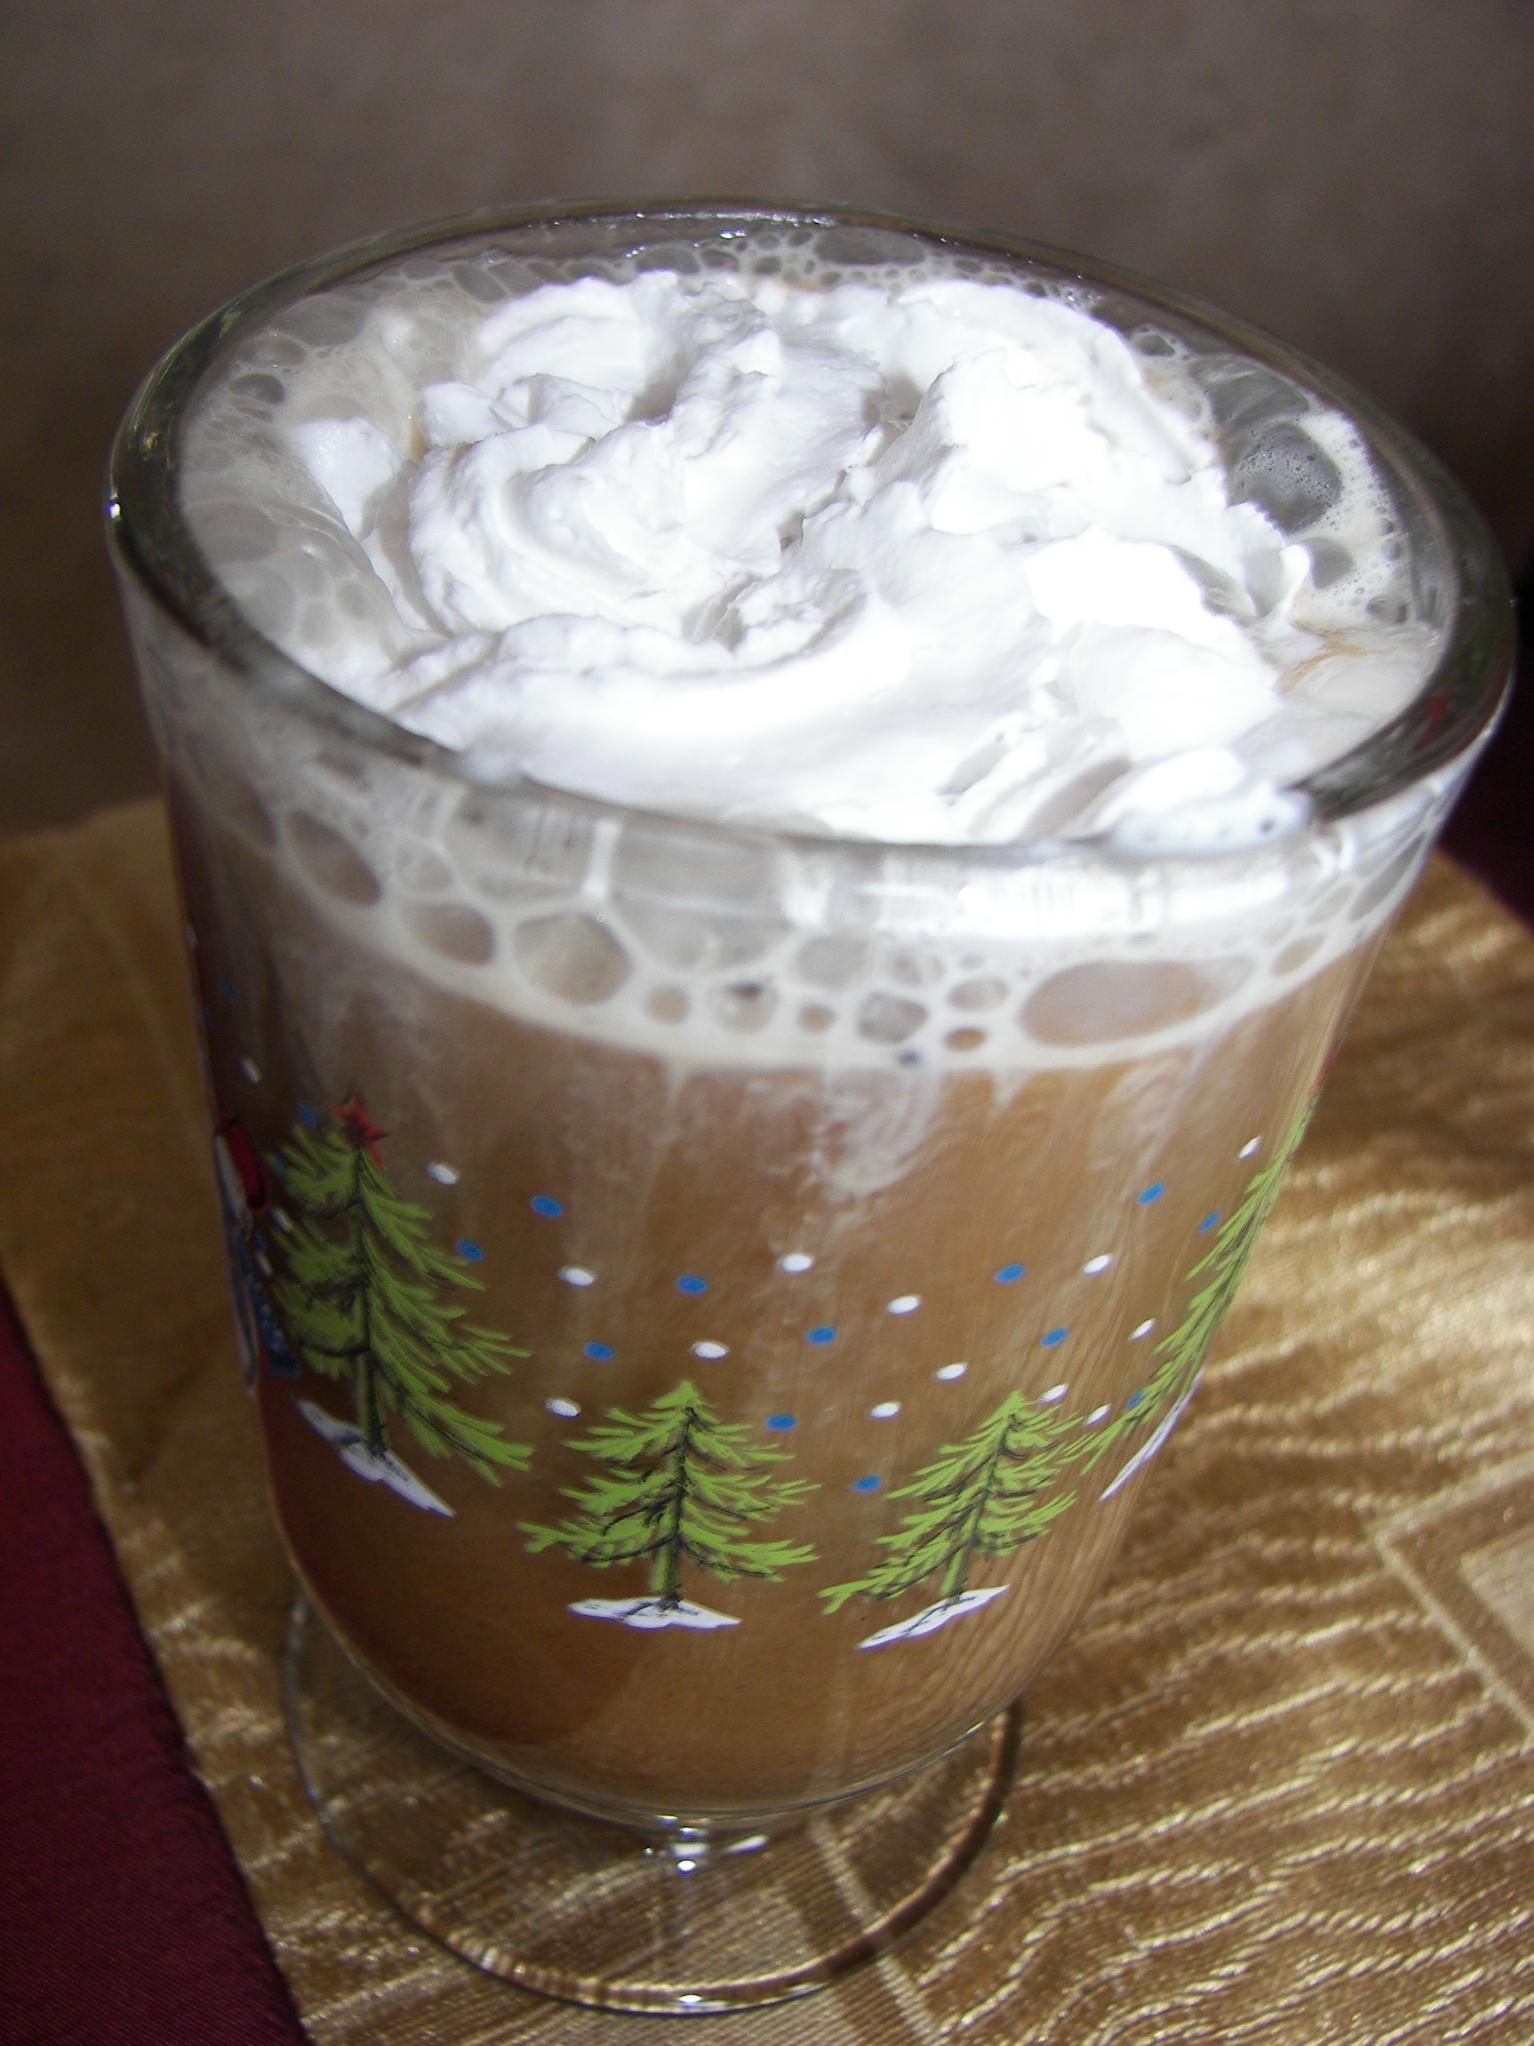 Authentic Arabian Coffee Recipe That Never Fails